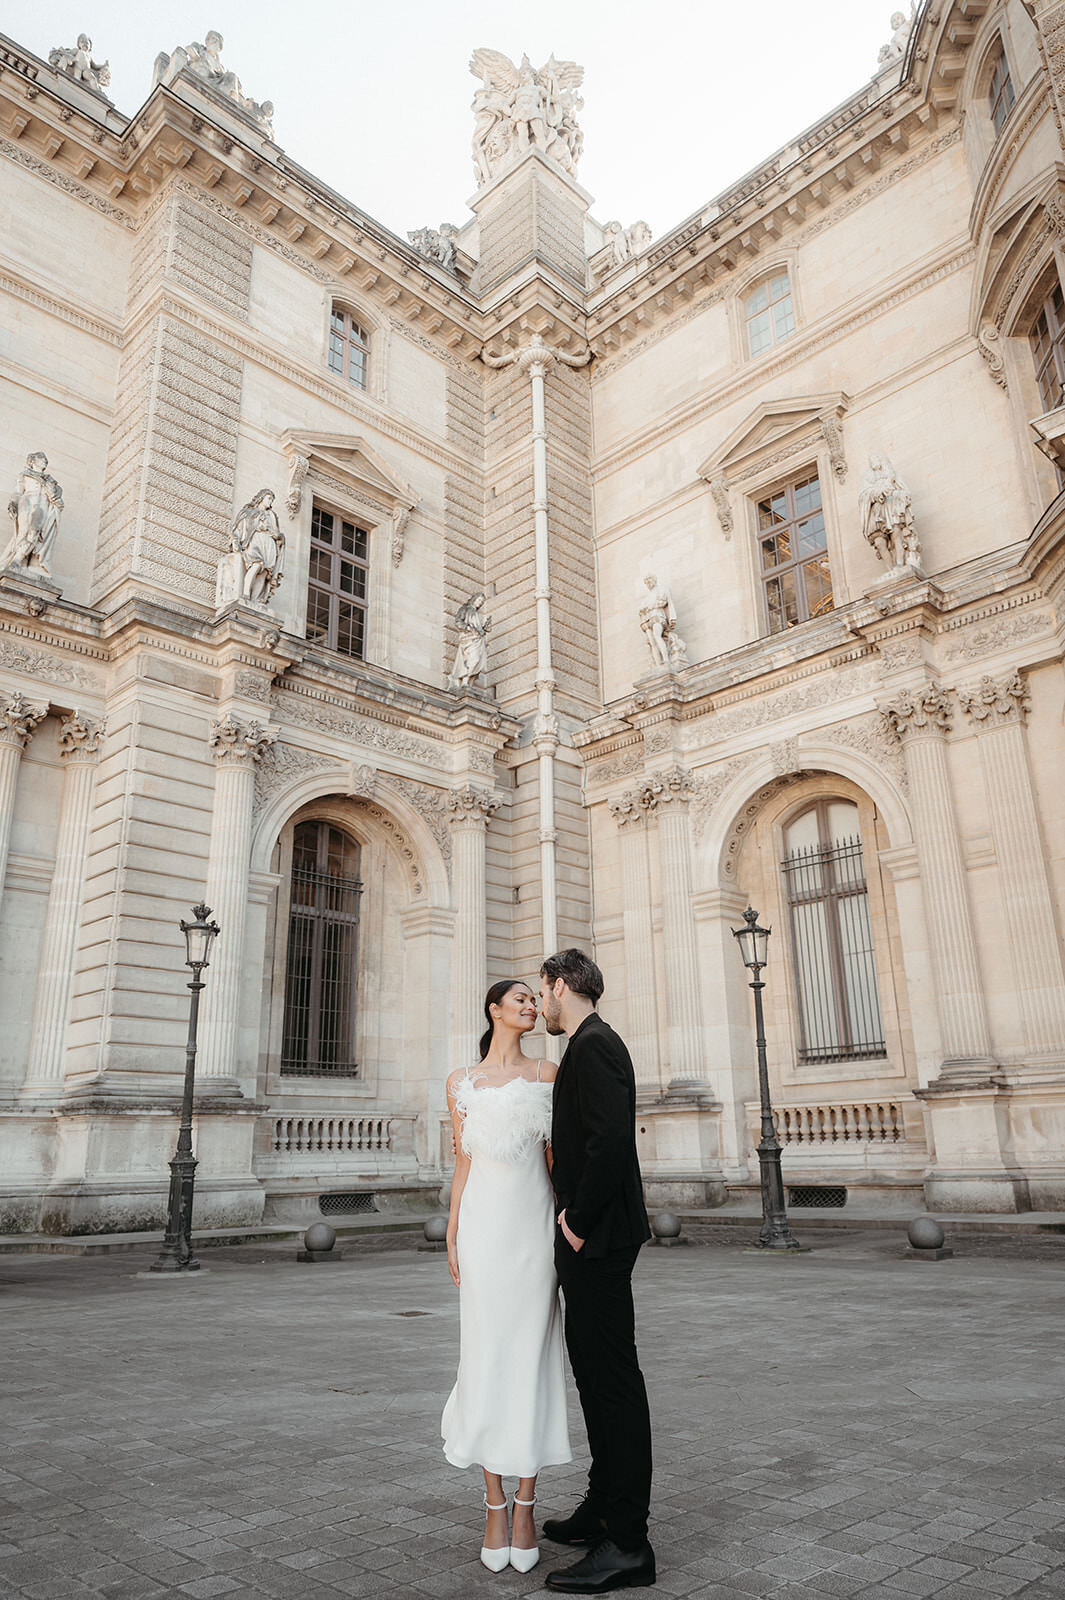 Wedding photographer europe france italy spain provence Hochzeitsfotograf Duesseldorf Koeln Elegant Editorial Tuscany Paris42